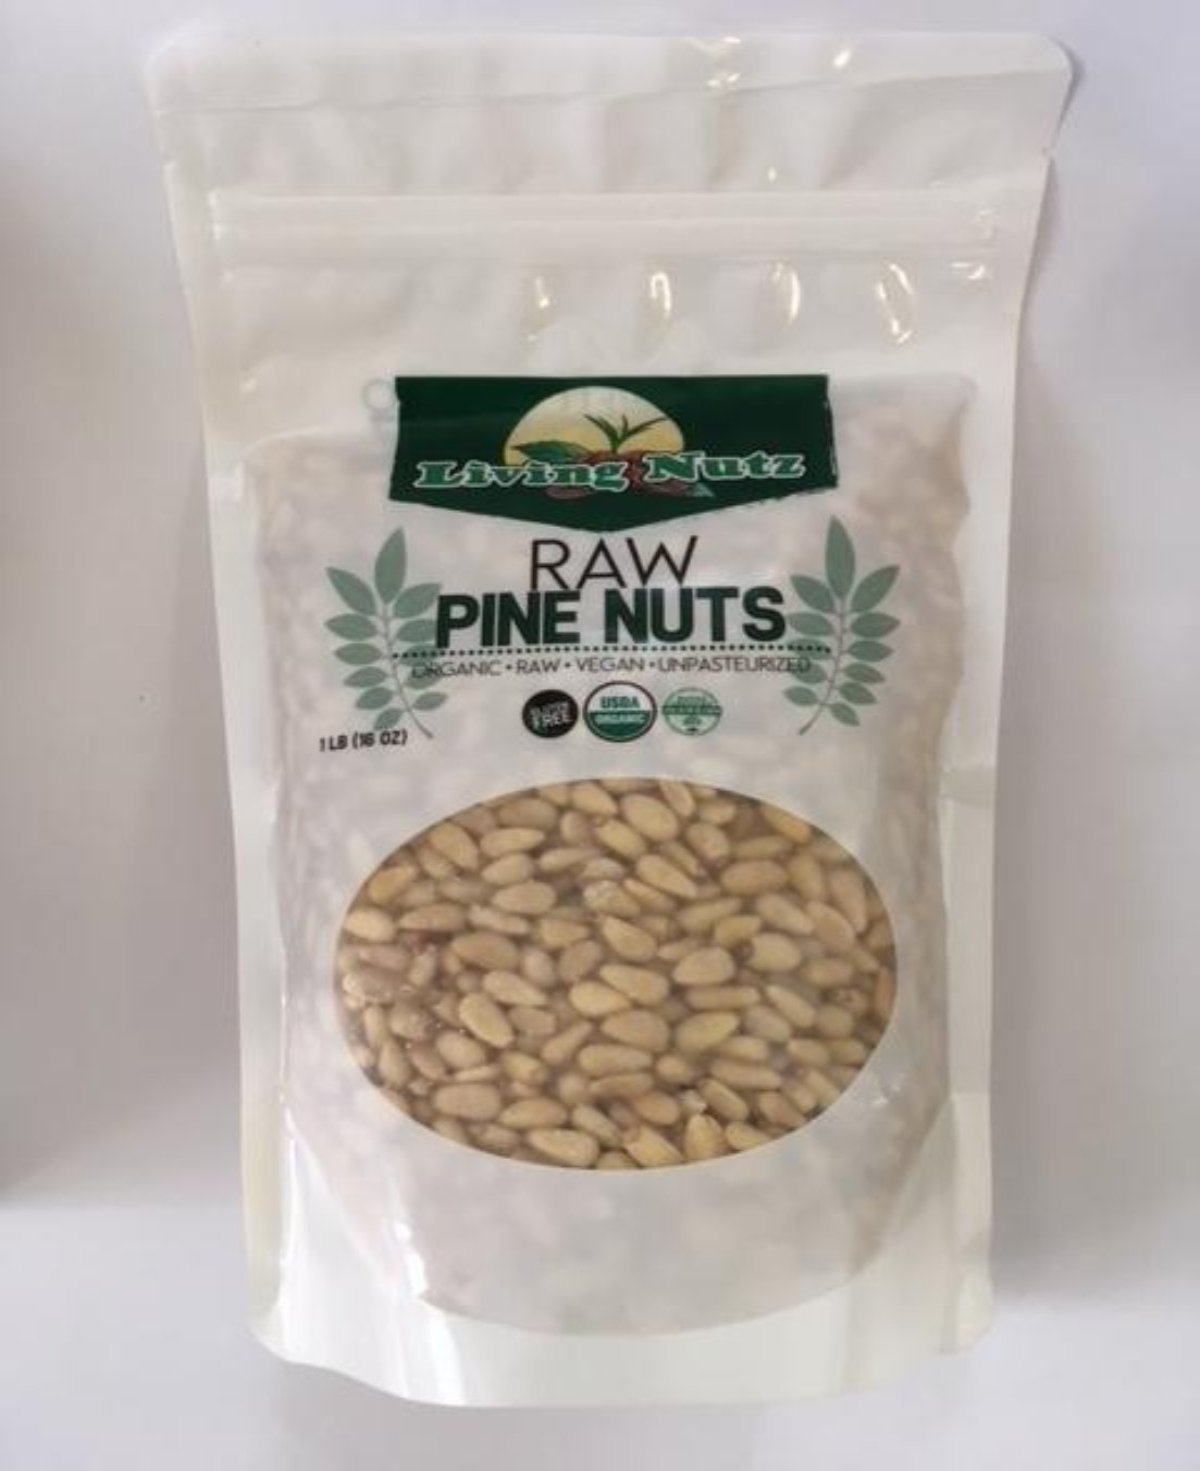 raw organic pine nuts for healthy benefits. Bulk organic pine nuts